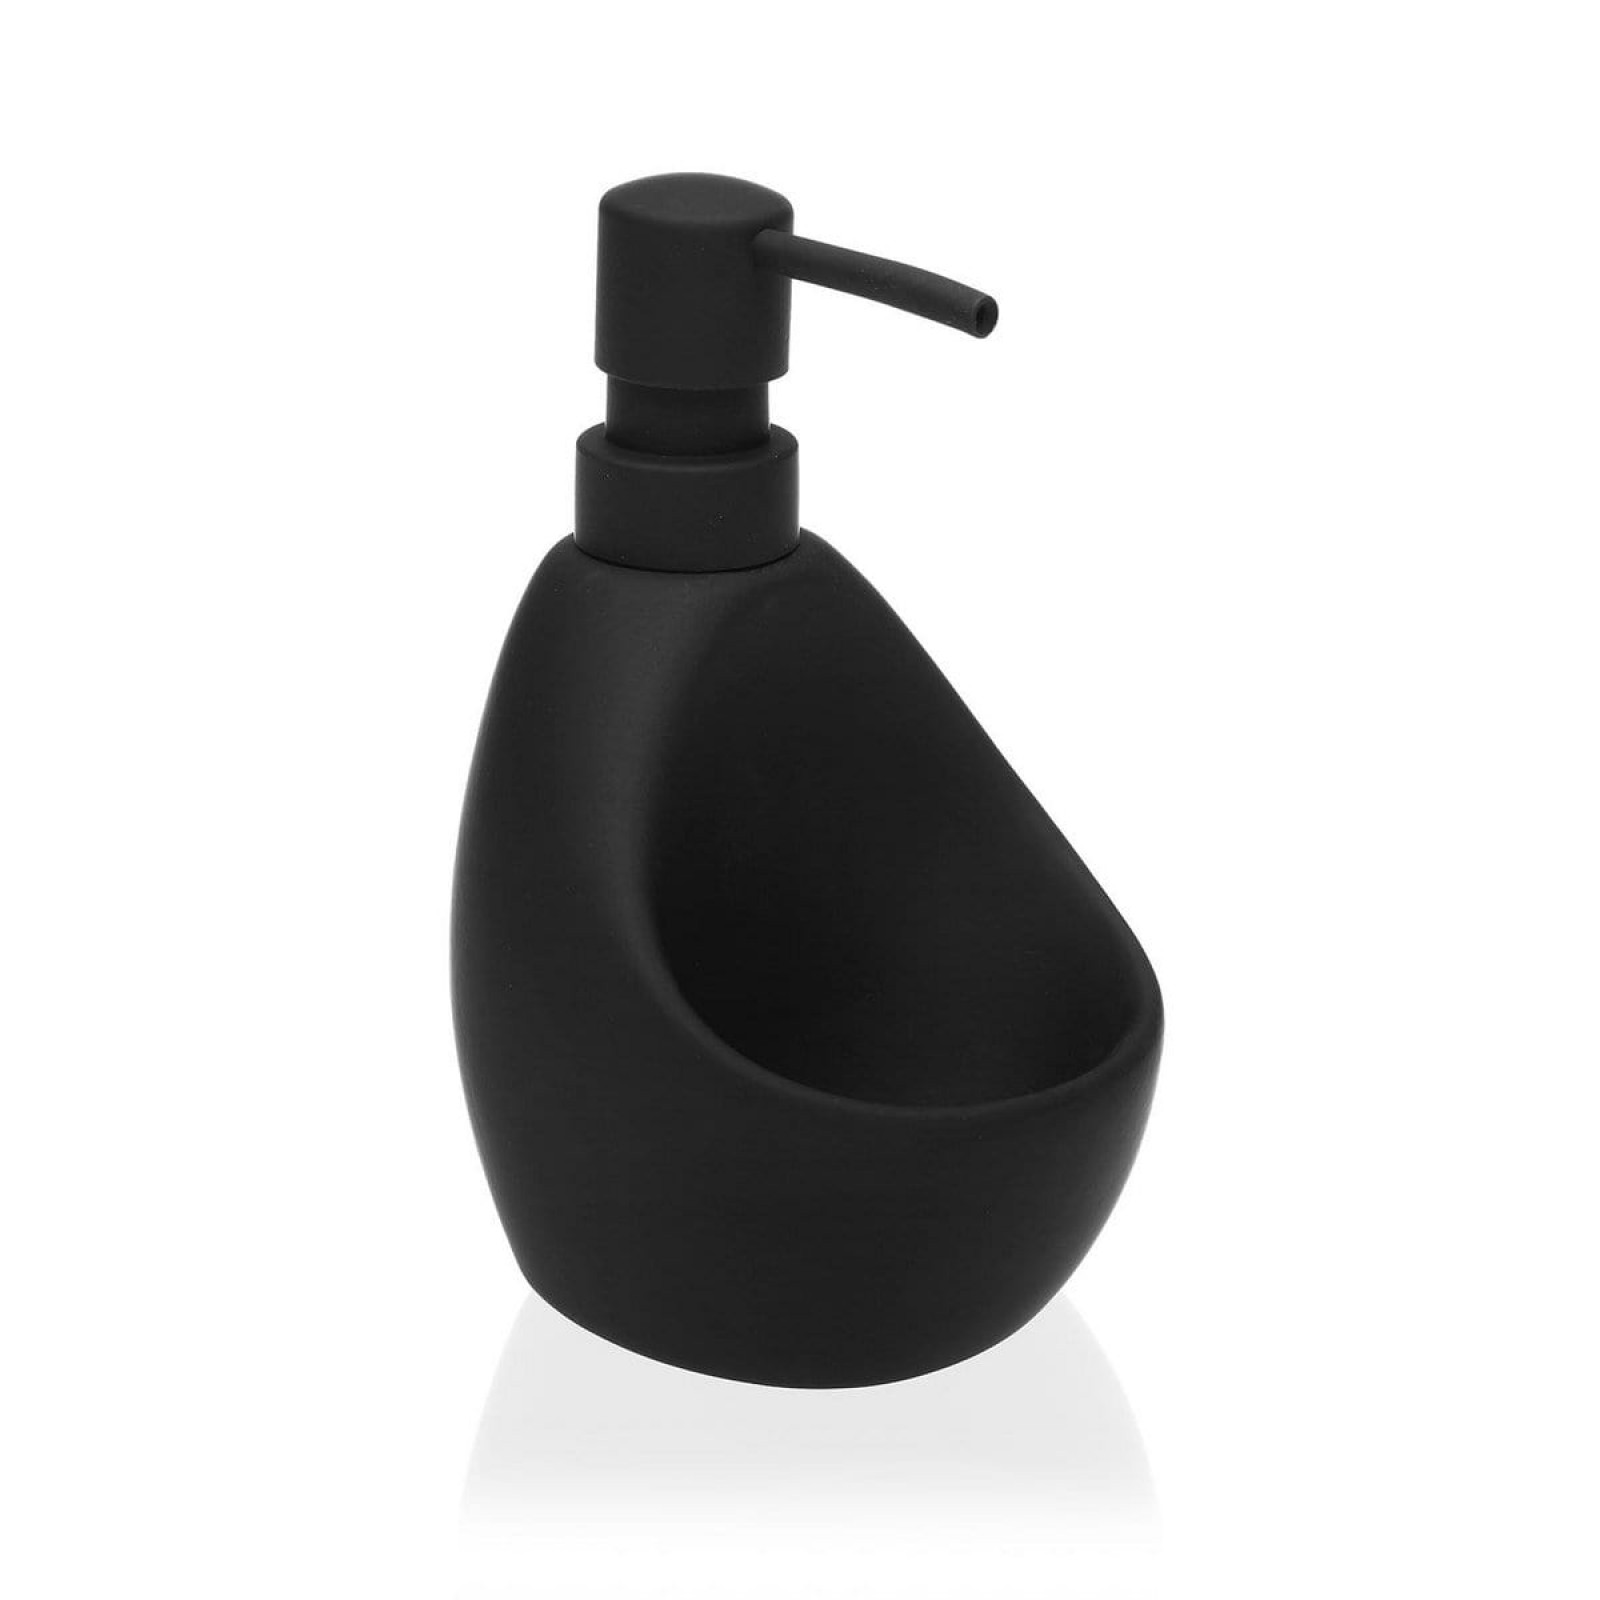 Ceramic Soap Pump With Sponge Holder (Black) - Versa